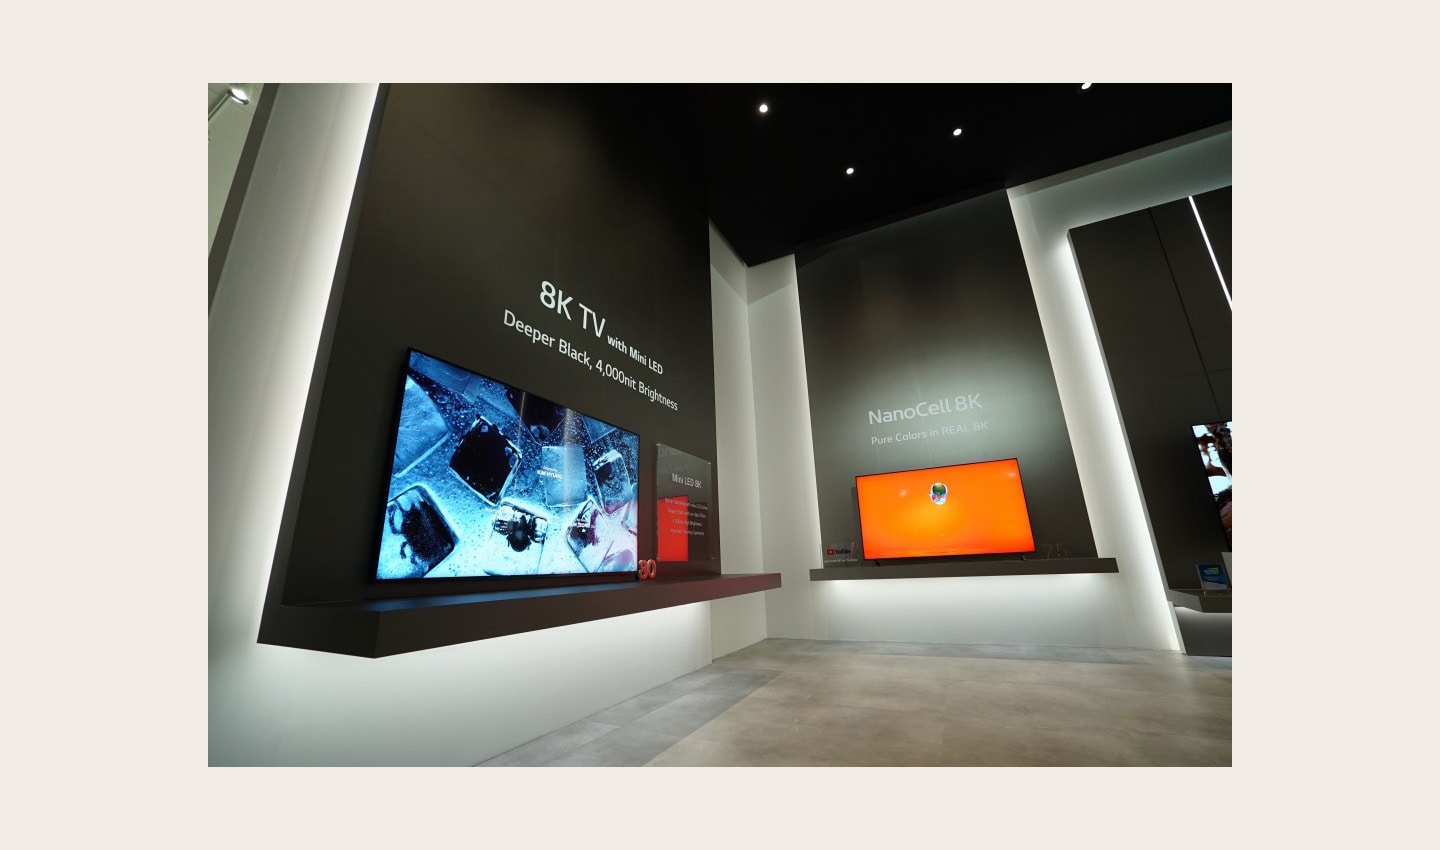 A view of the corner of LG’s 8K TV zone at CES 2020, with the company’s Mini LED and 8K NanoCell TVs on display